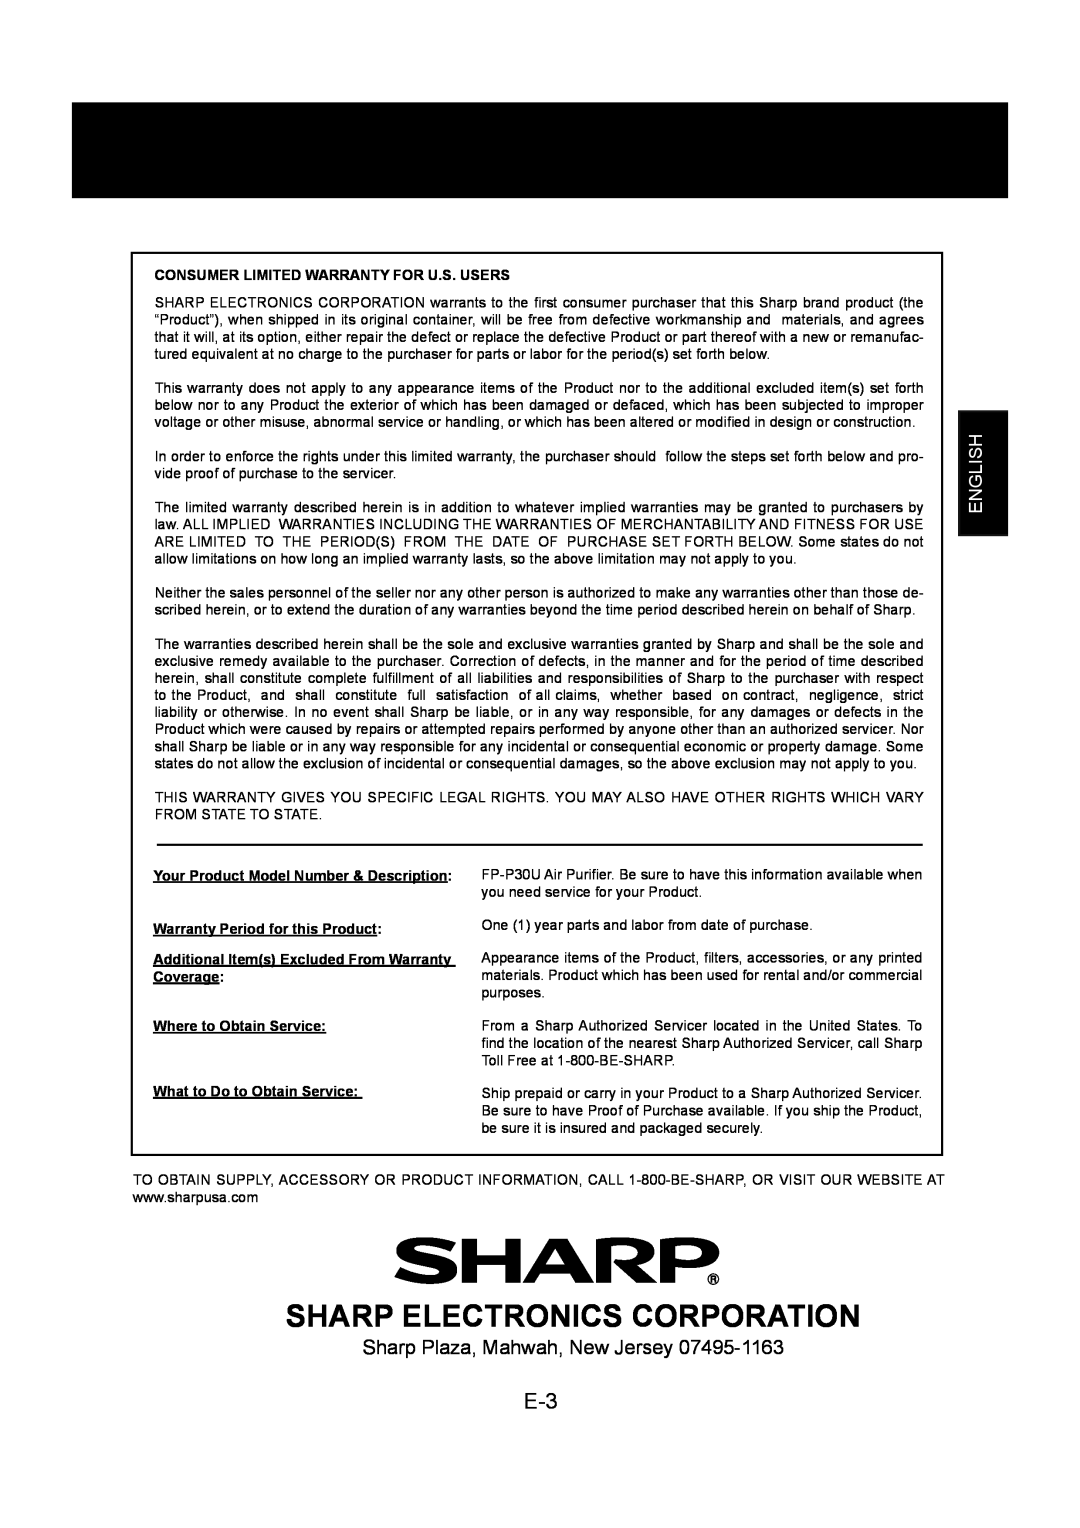 Sharp FP-P30U operation manual Sharp Electronics Corporation, English, Consumer Limited Warranty For U.S. Users 